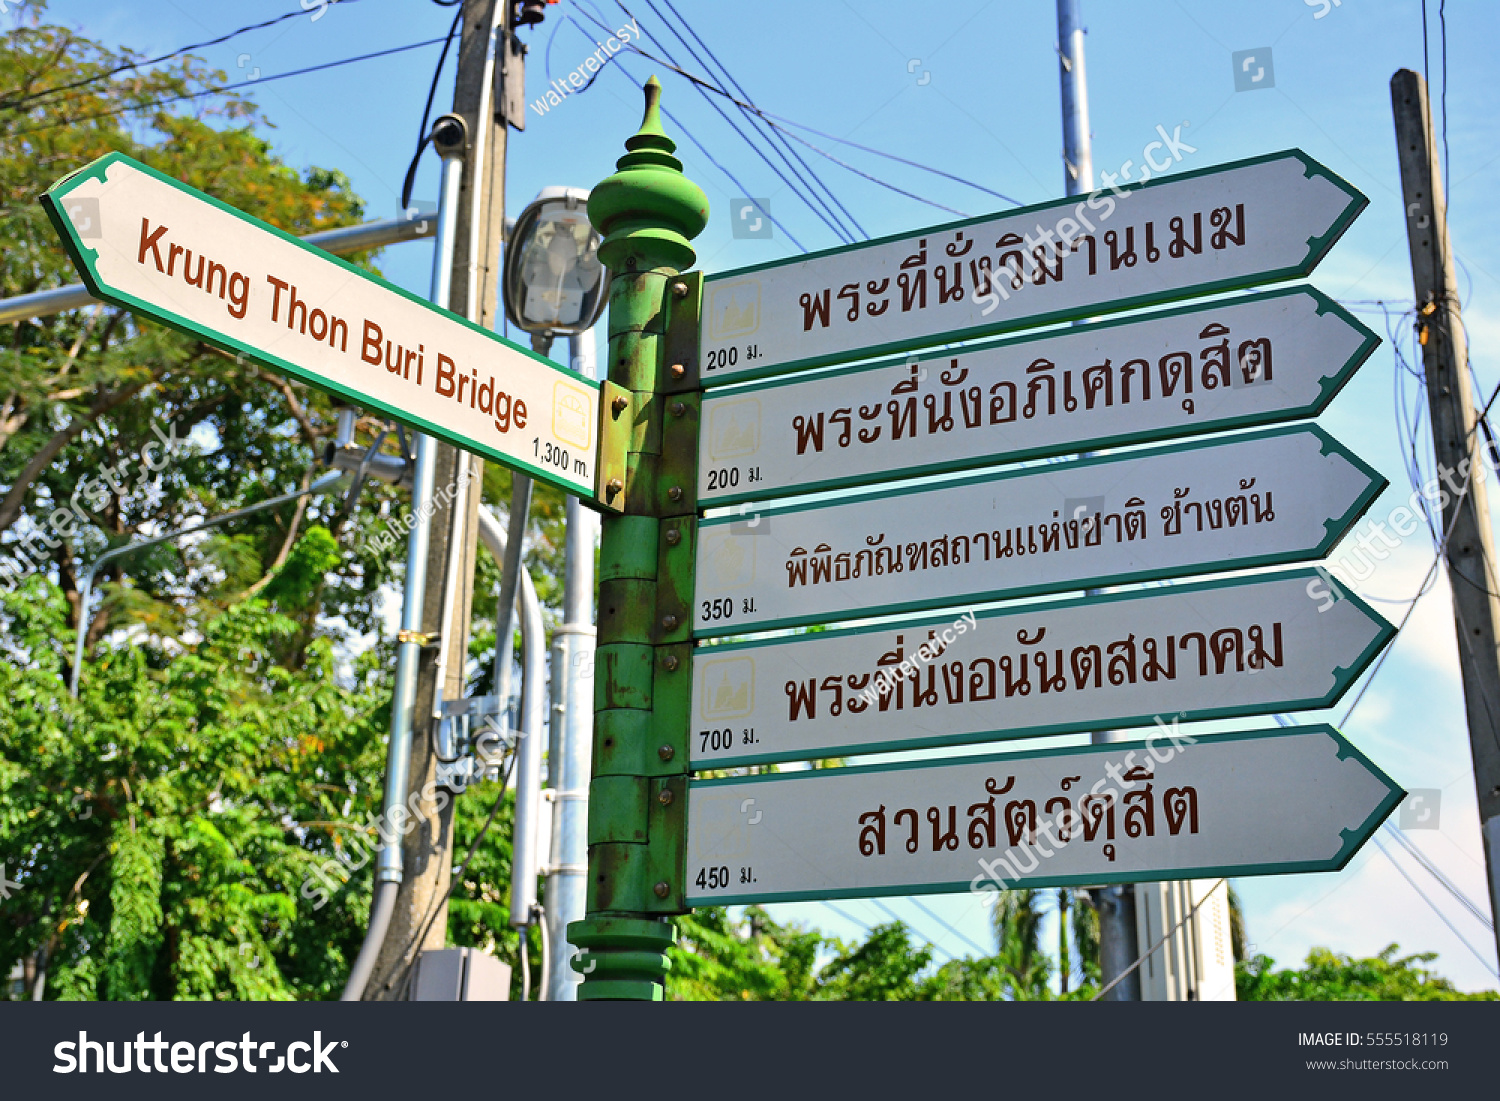 stock-photo-bangkok-th-dec-krung-thon-buri-bridge-street-name-signpost-on-december-in-bangkok-555518119.jpg